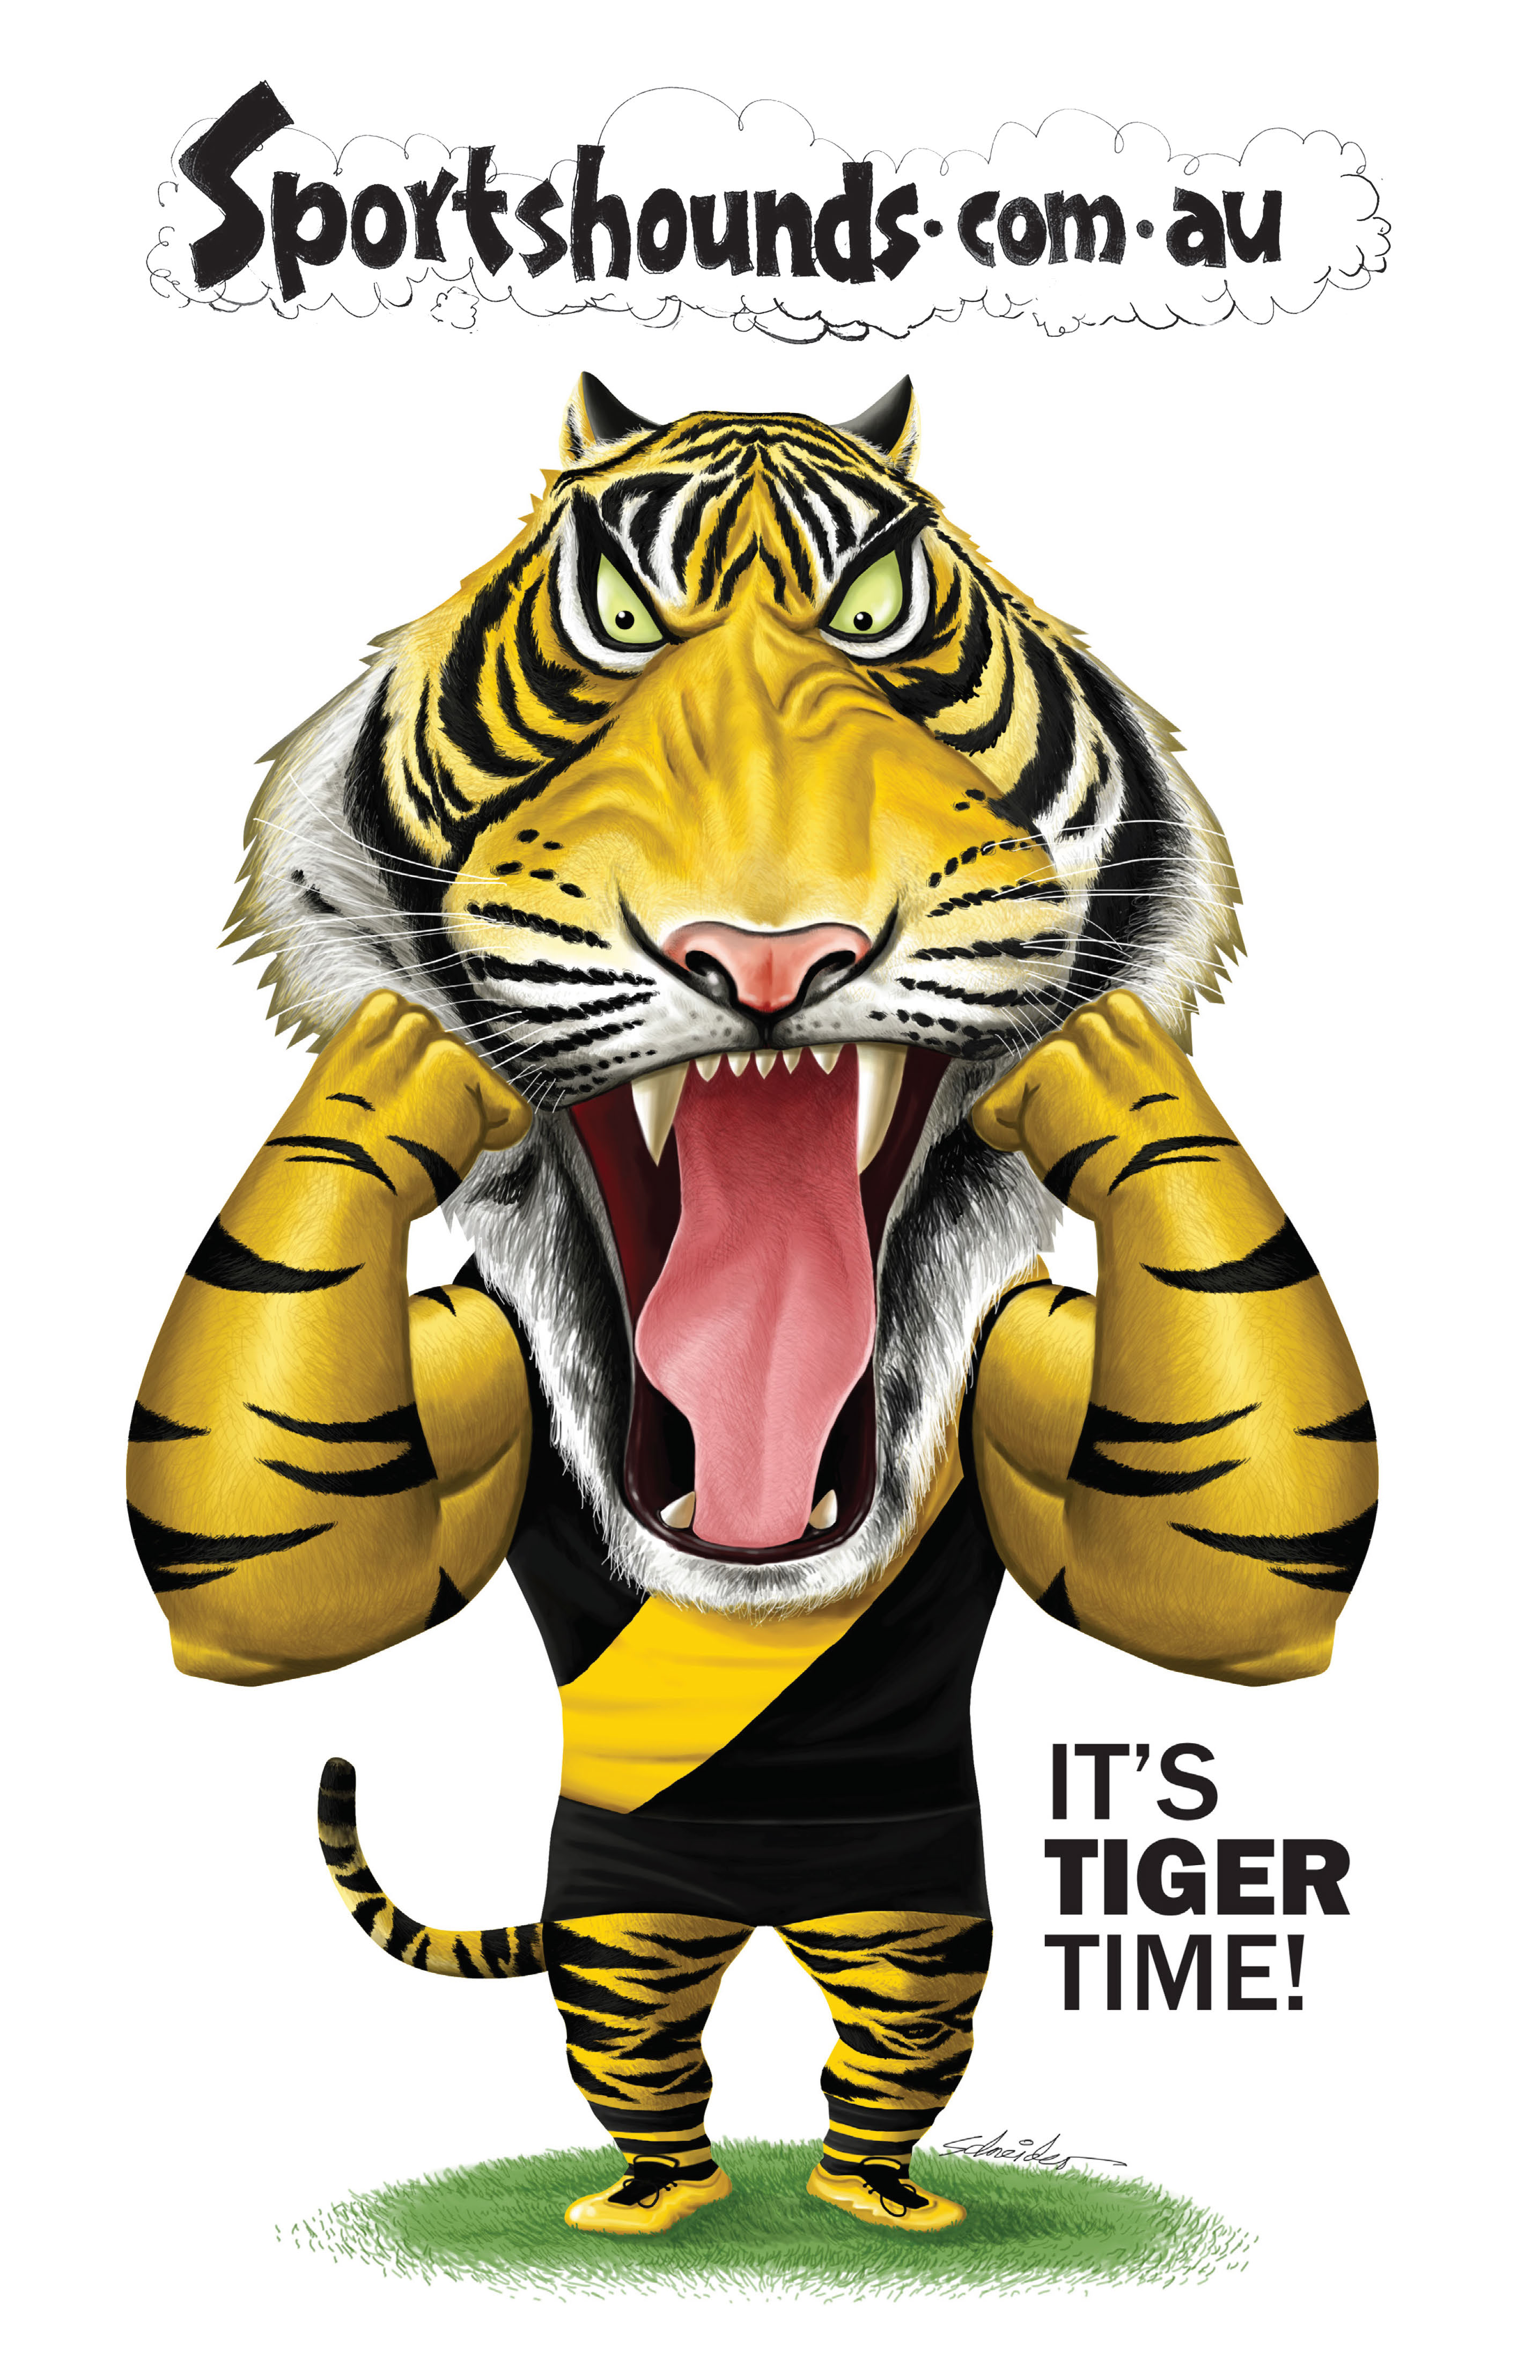 Tiger time poster